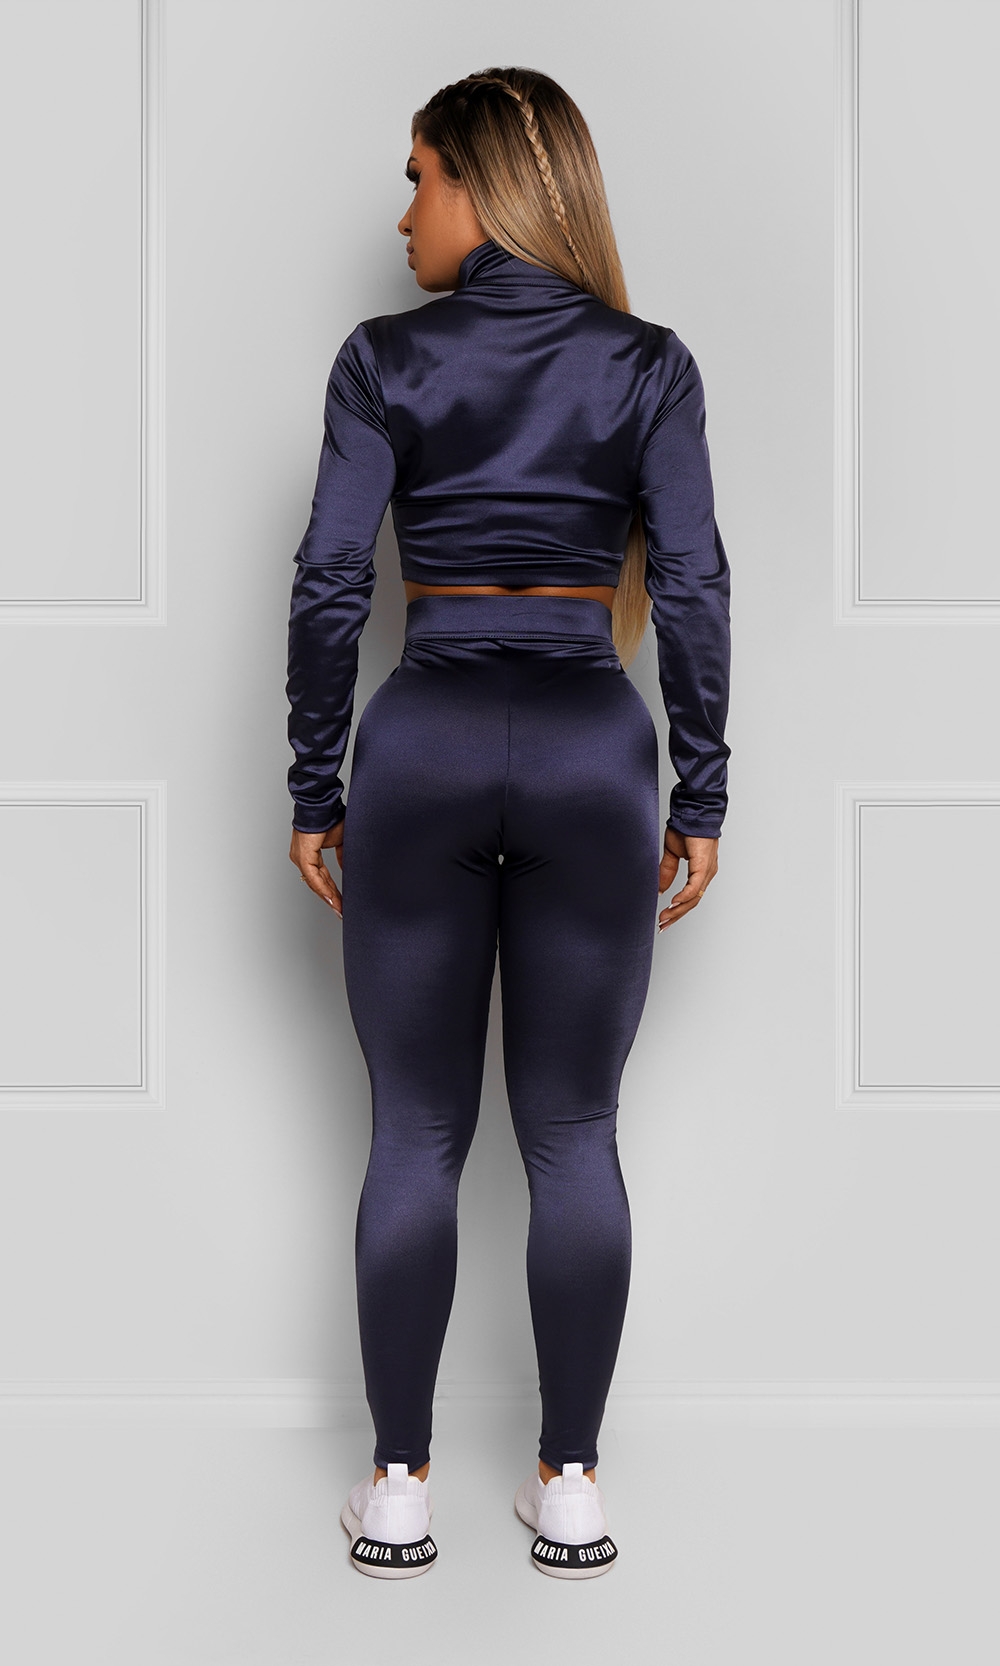 Conjunto top + legging ziper sport maria gueixa - Conjunto de